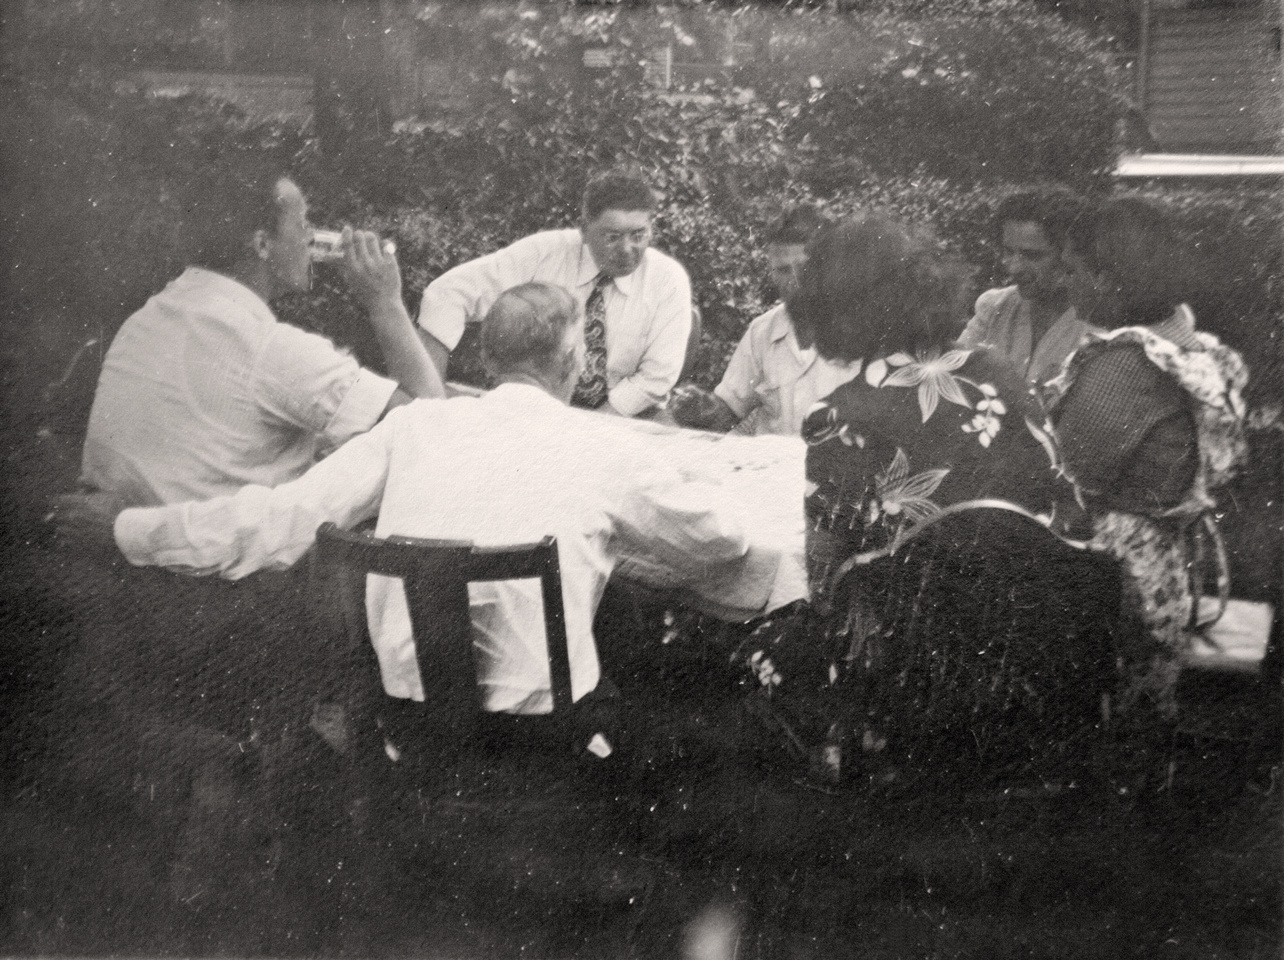 Michelle M. Murosky: The Murosky Collection &emdash; 1945 Murosky Family Gathering